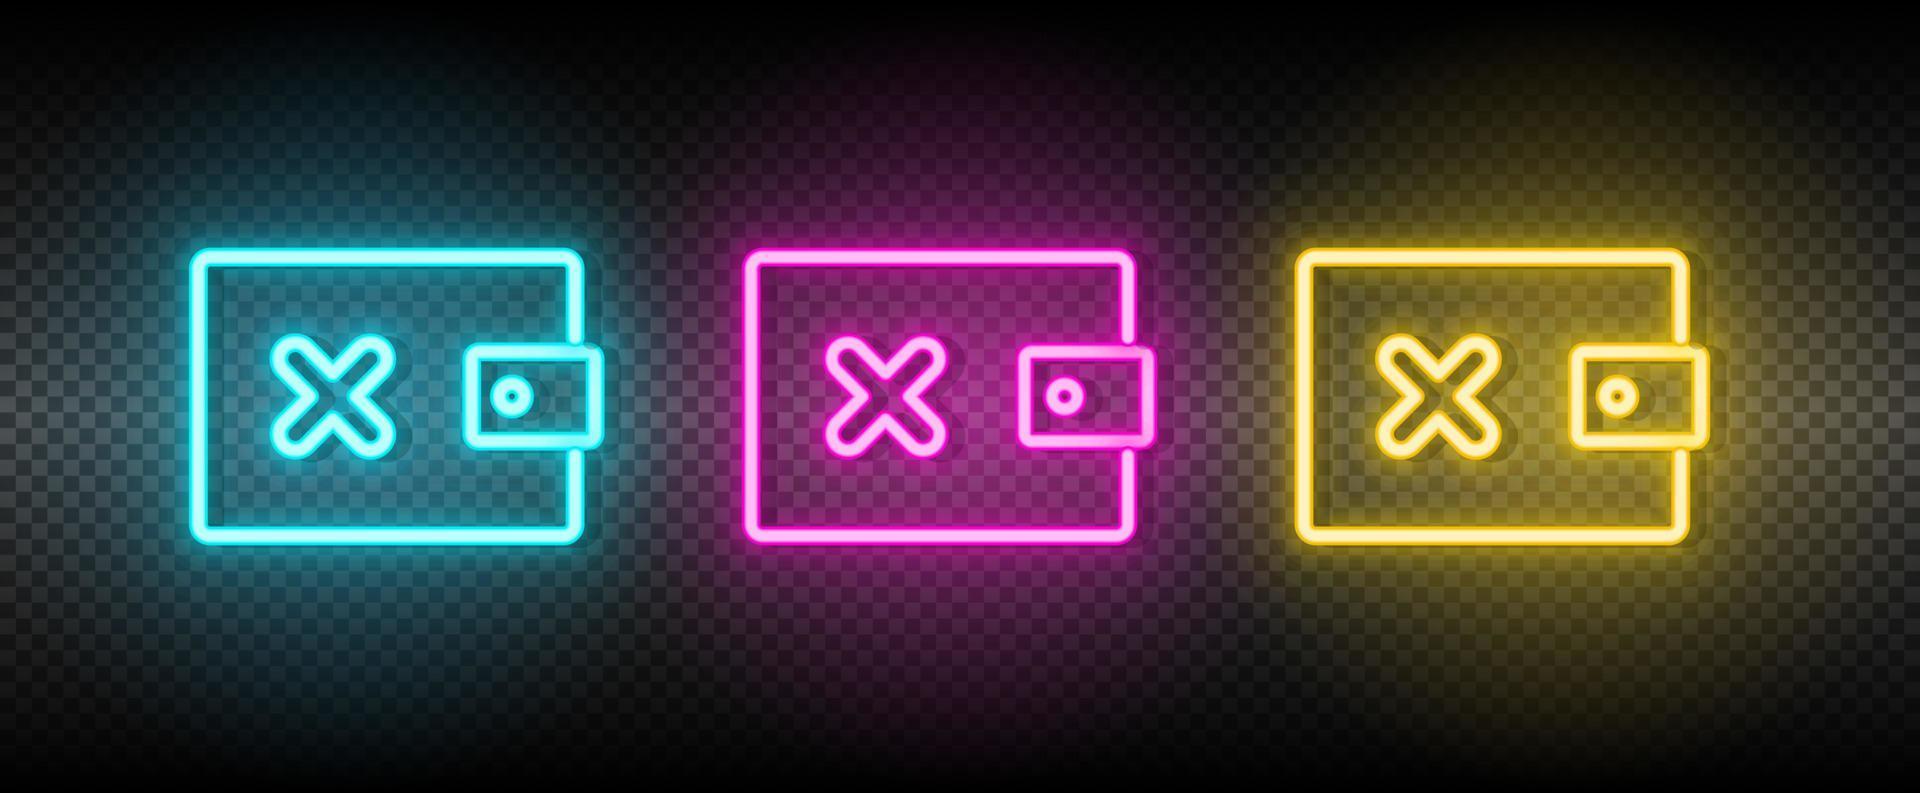 delete, money, wallet neon vector icon. Illustration neon blue, yellow, red icon set.